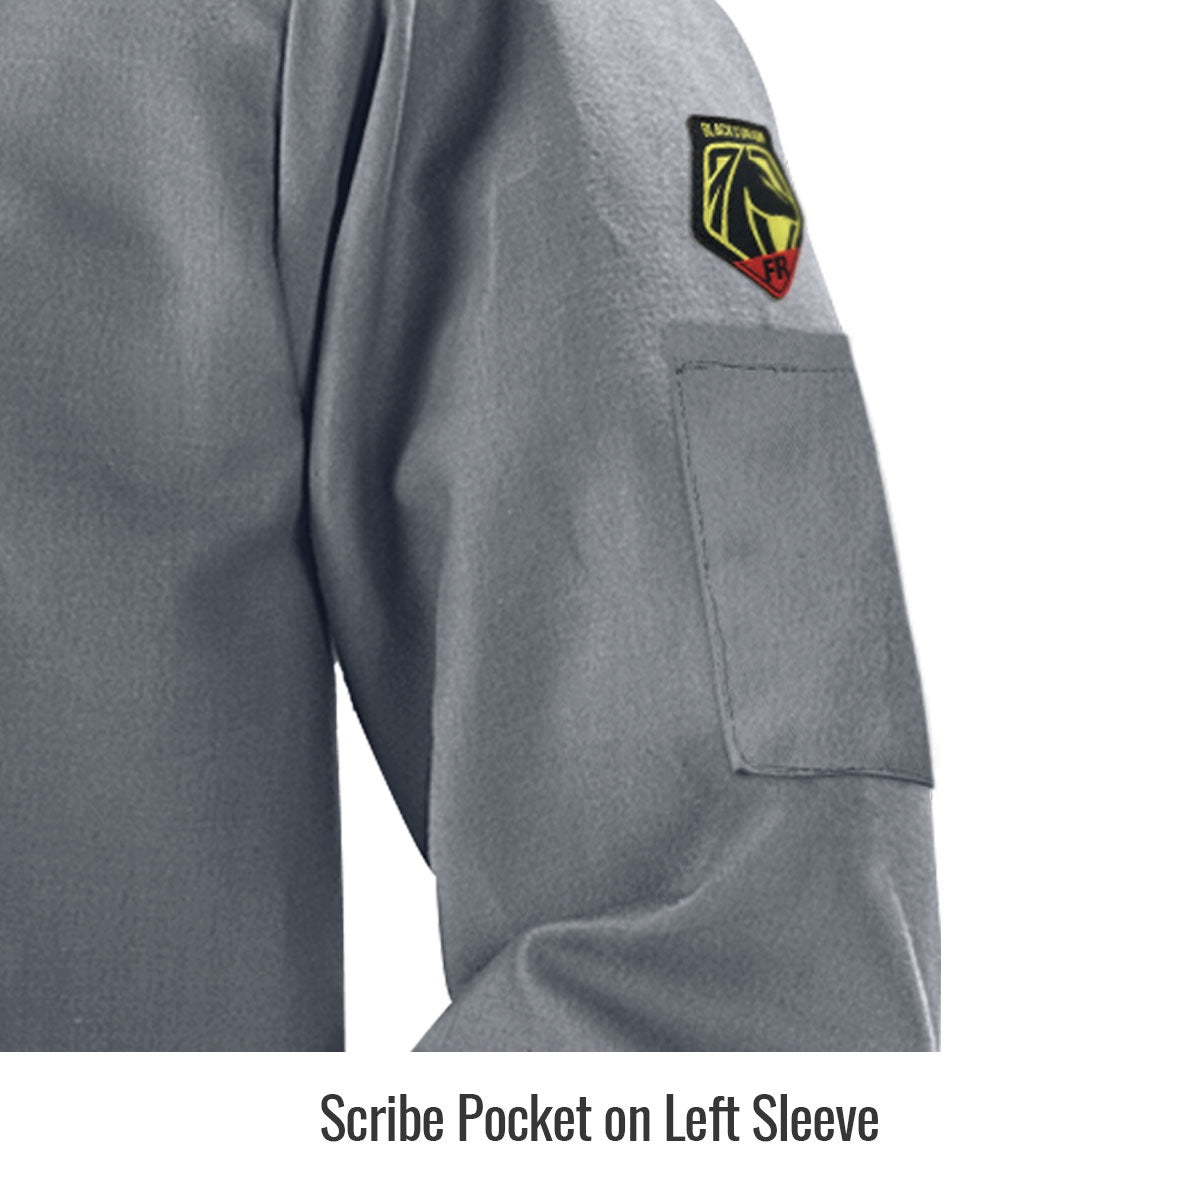 Revco Black Stallion NFPA 9oz Gray FR Cotton Welding Jacket (JF2220-GY)